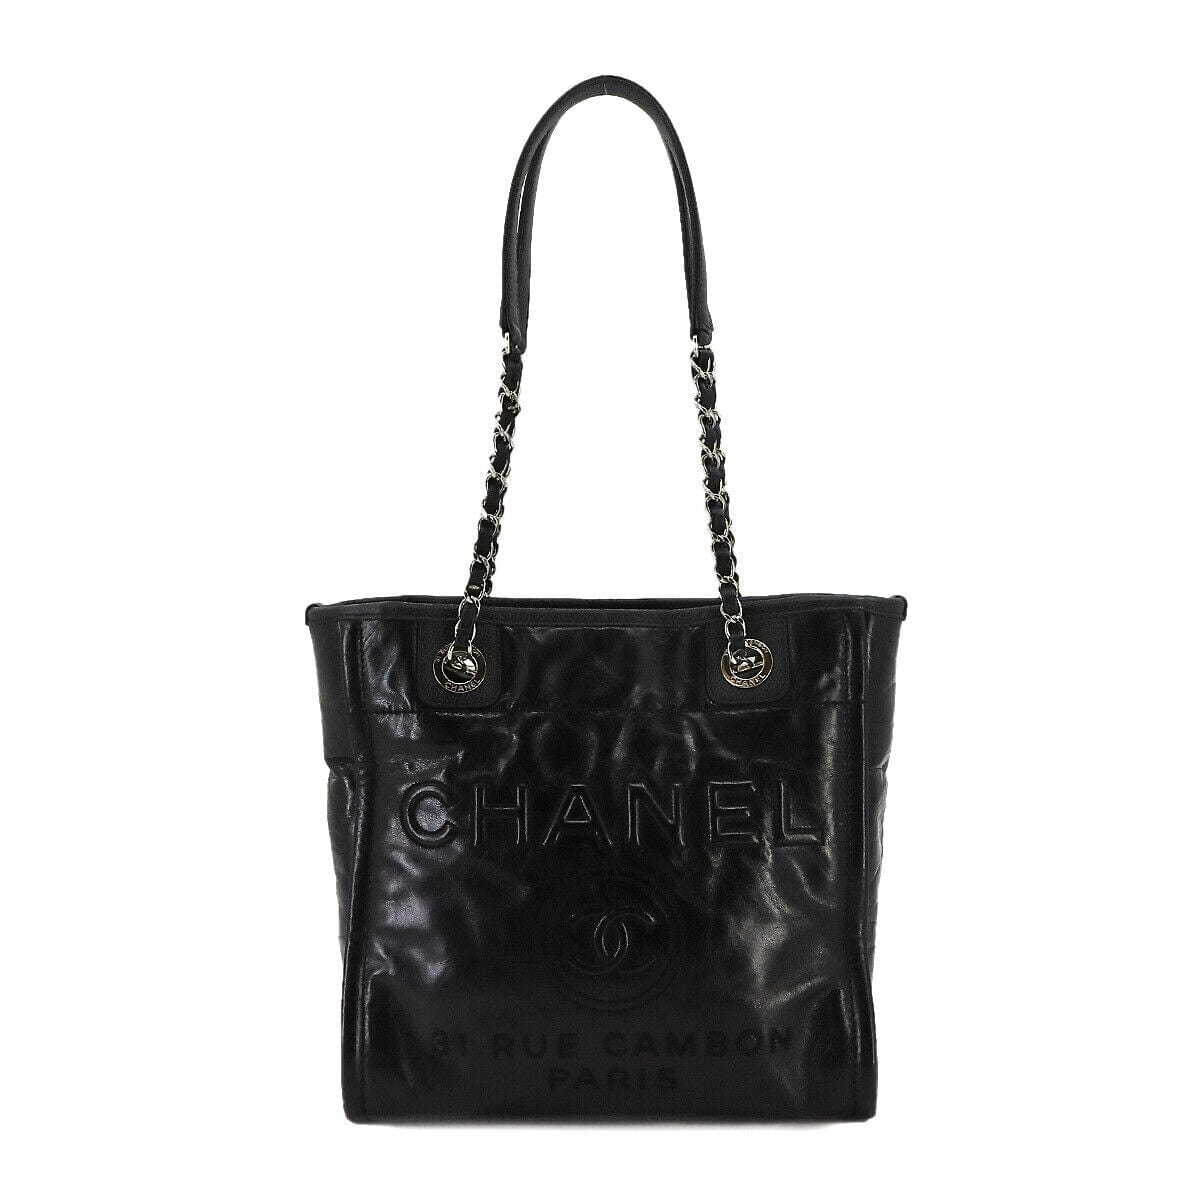 Chanel CHANEL Deauville Chain Tote Bag Leather Black Purse 90224234